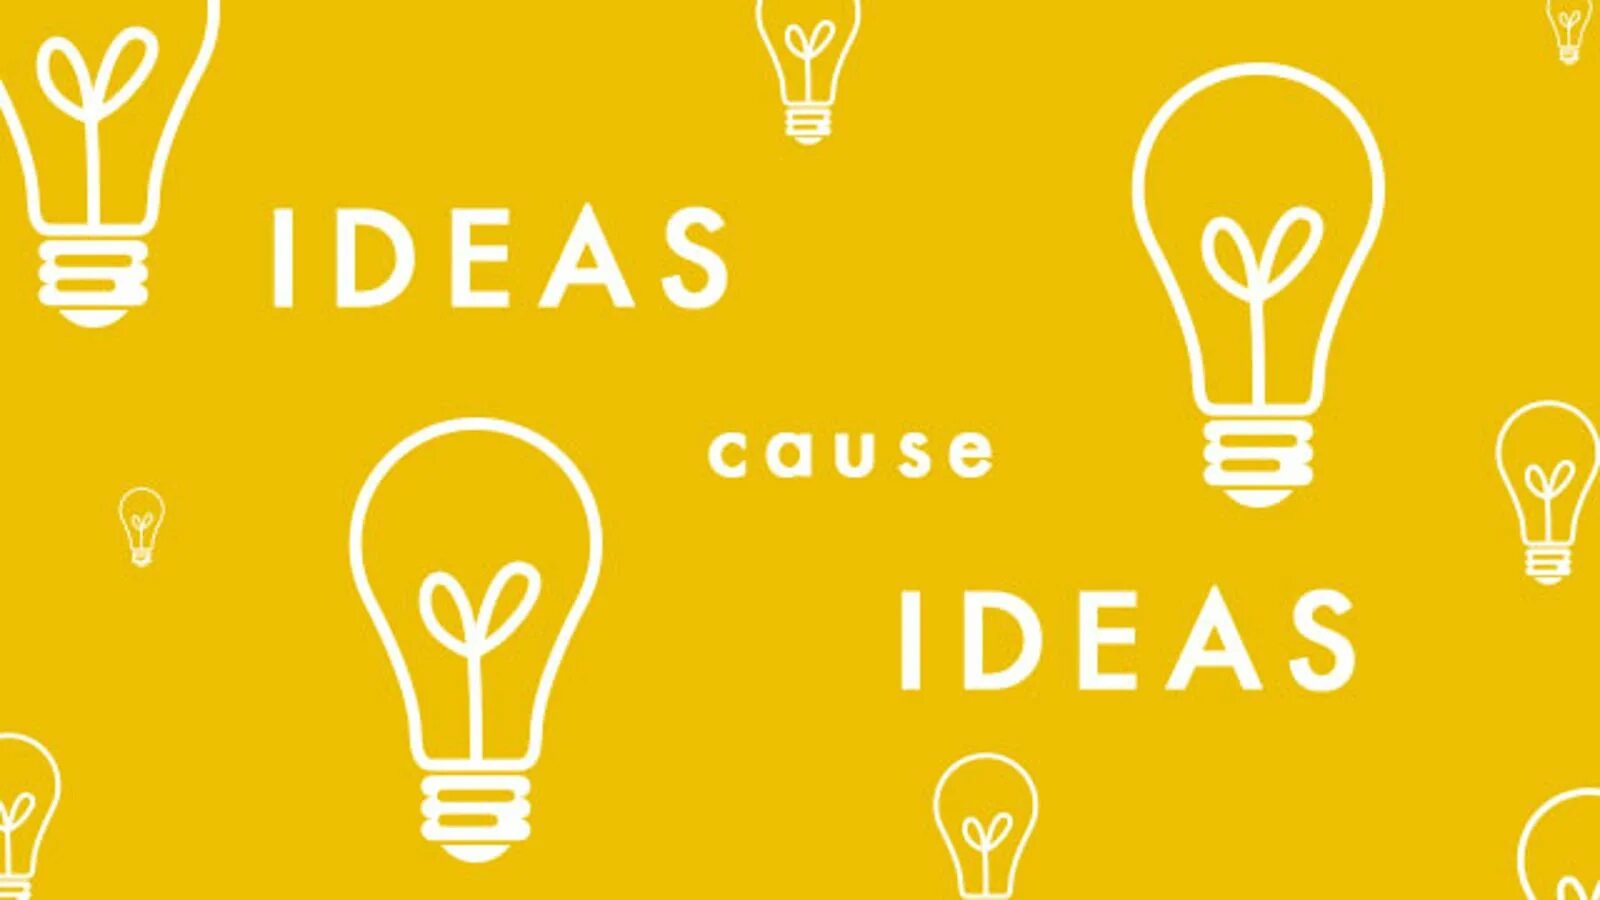 My good ideas. Idea. Share ideas. Best idea картинка. Share your ideas.